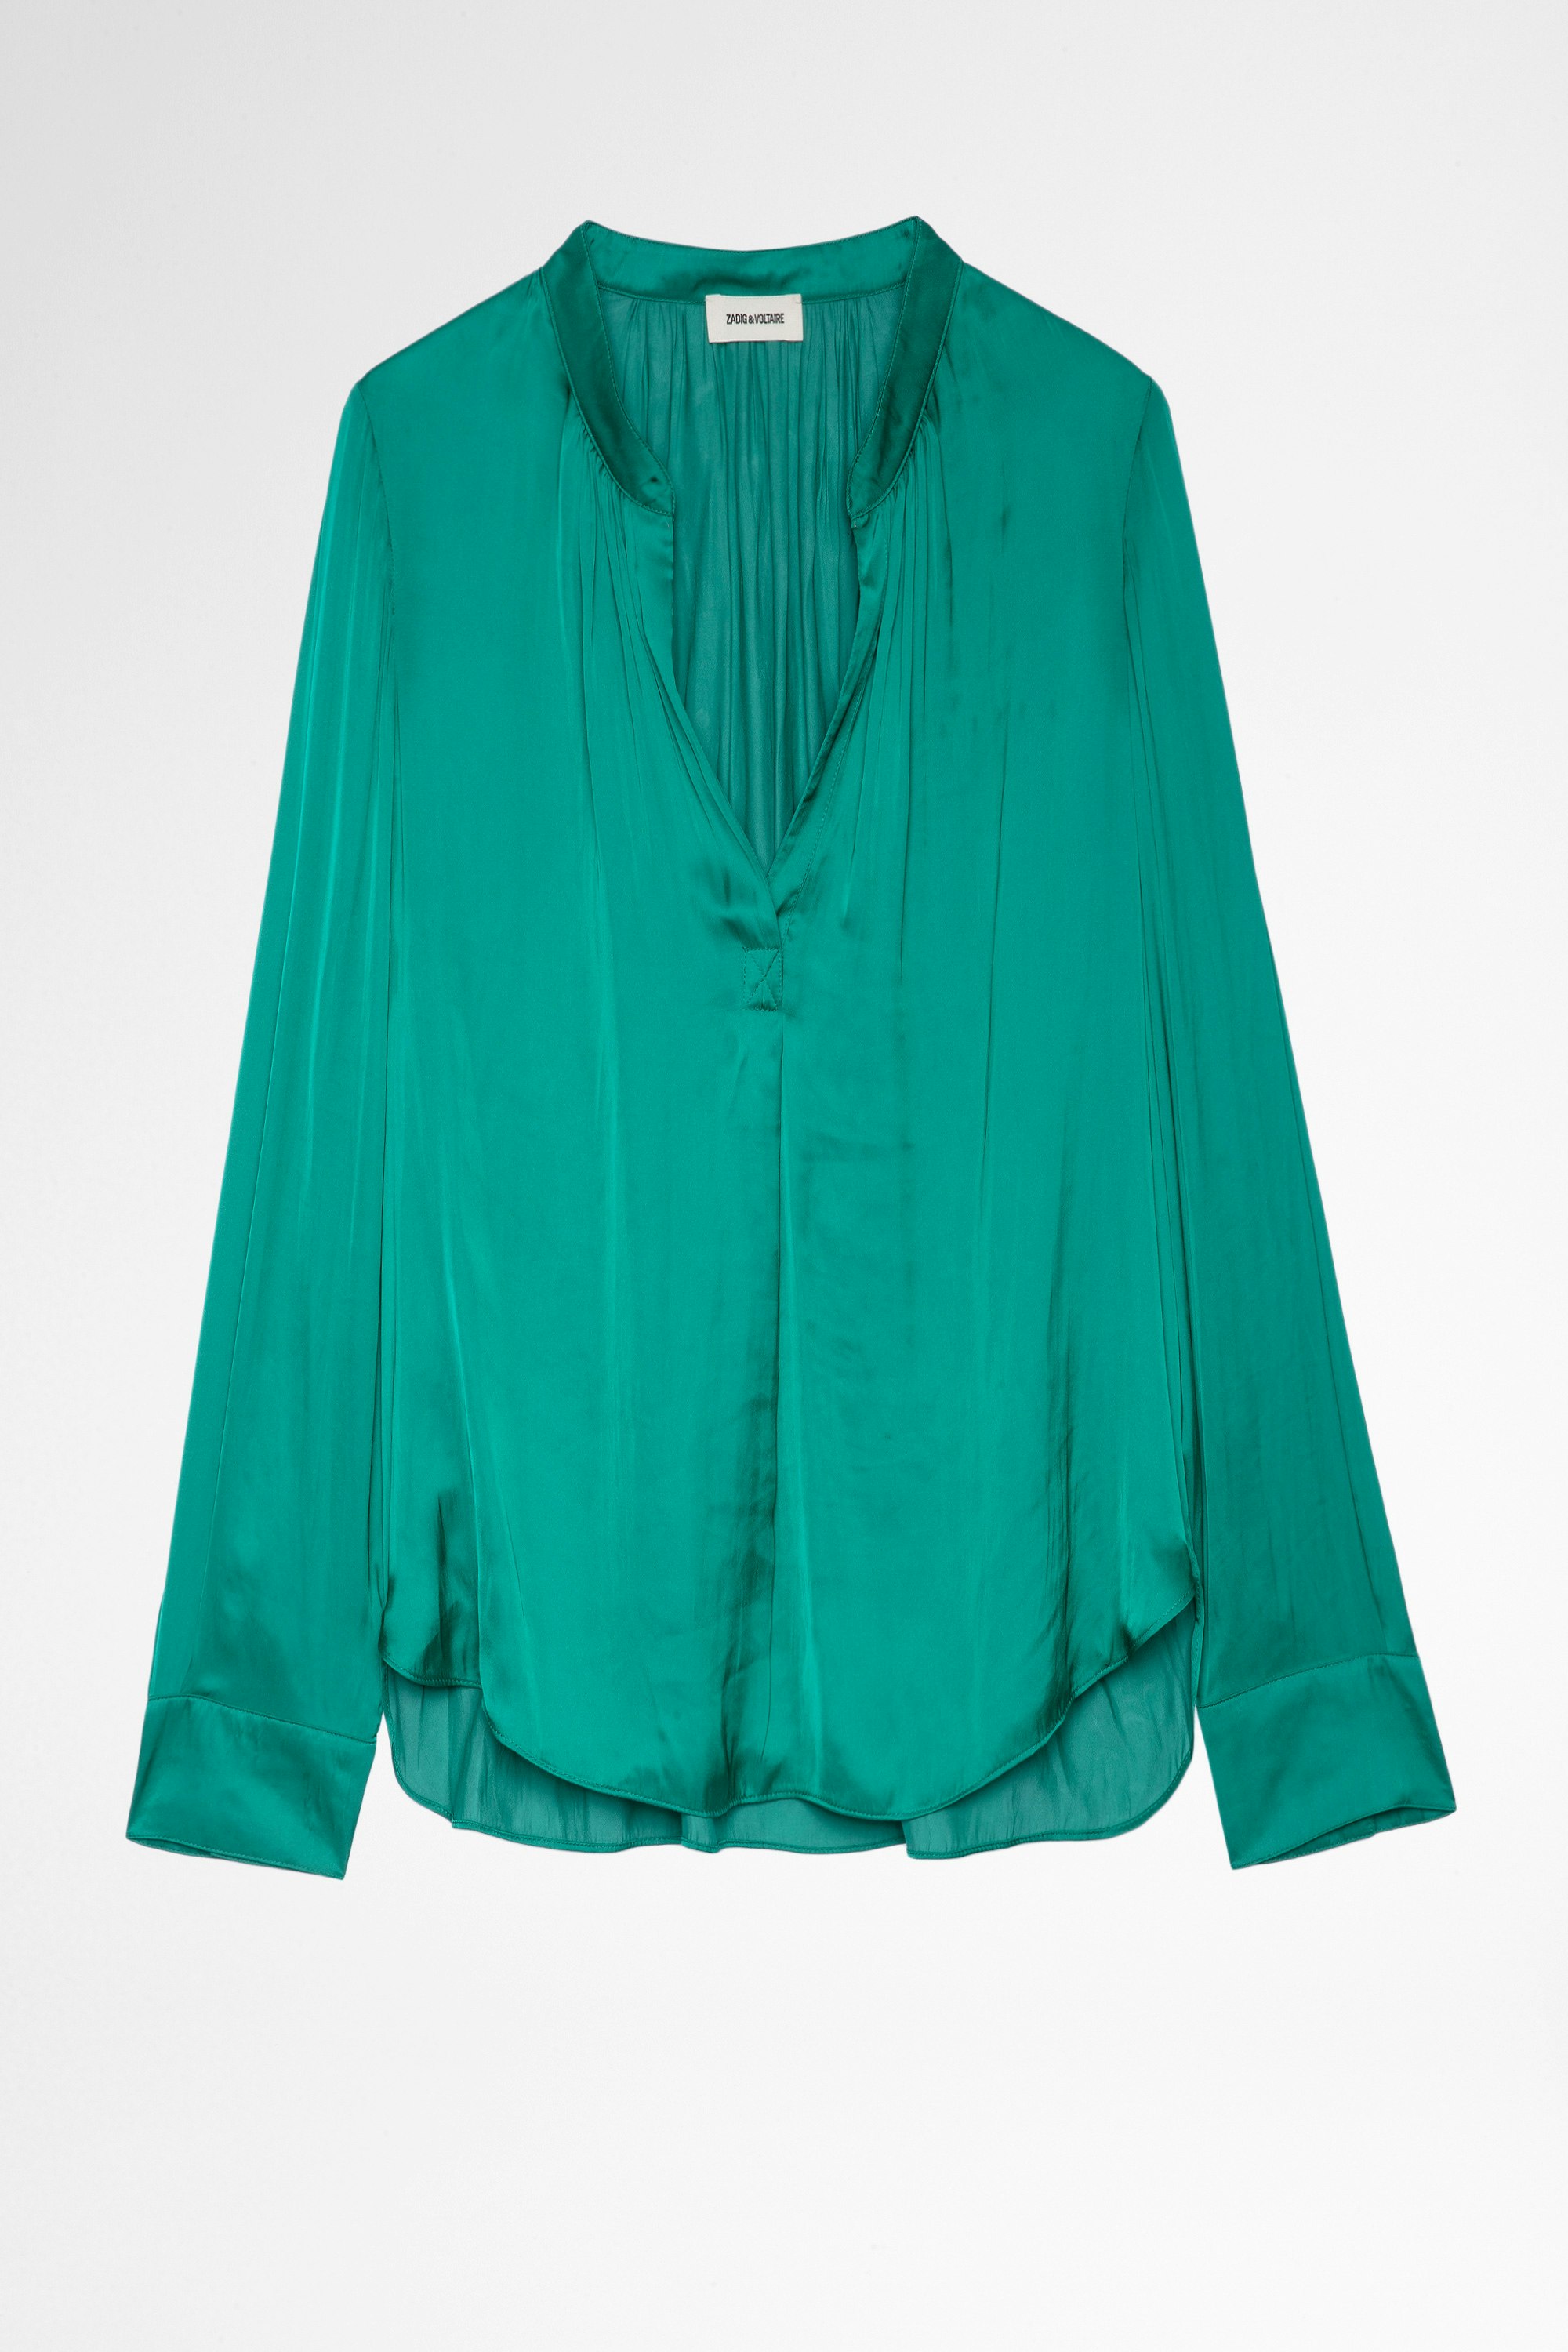 Tink Satin Blouse Women's long-sleeved green satin shirt